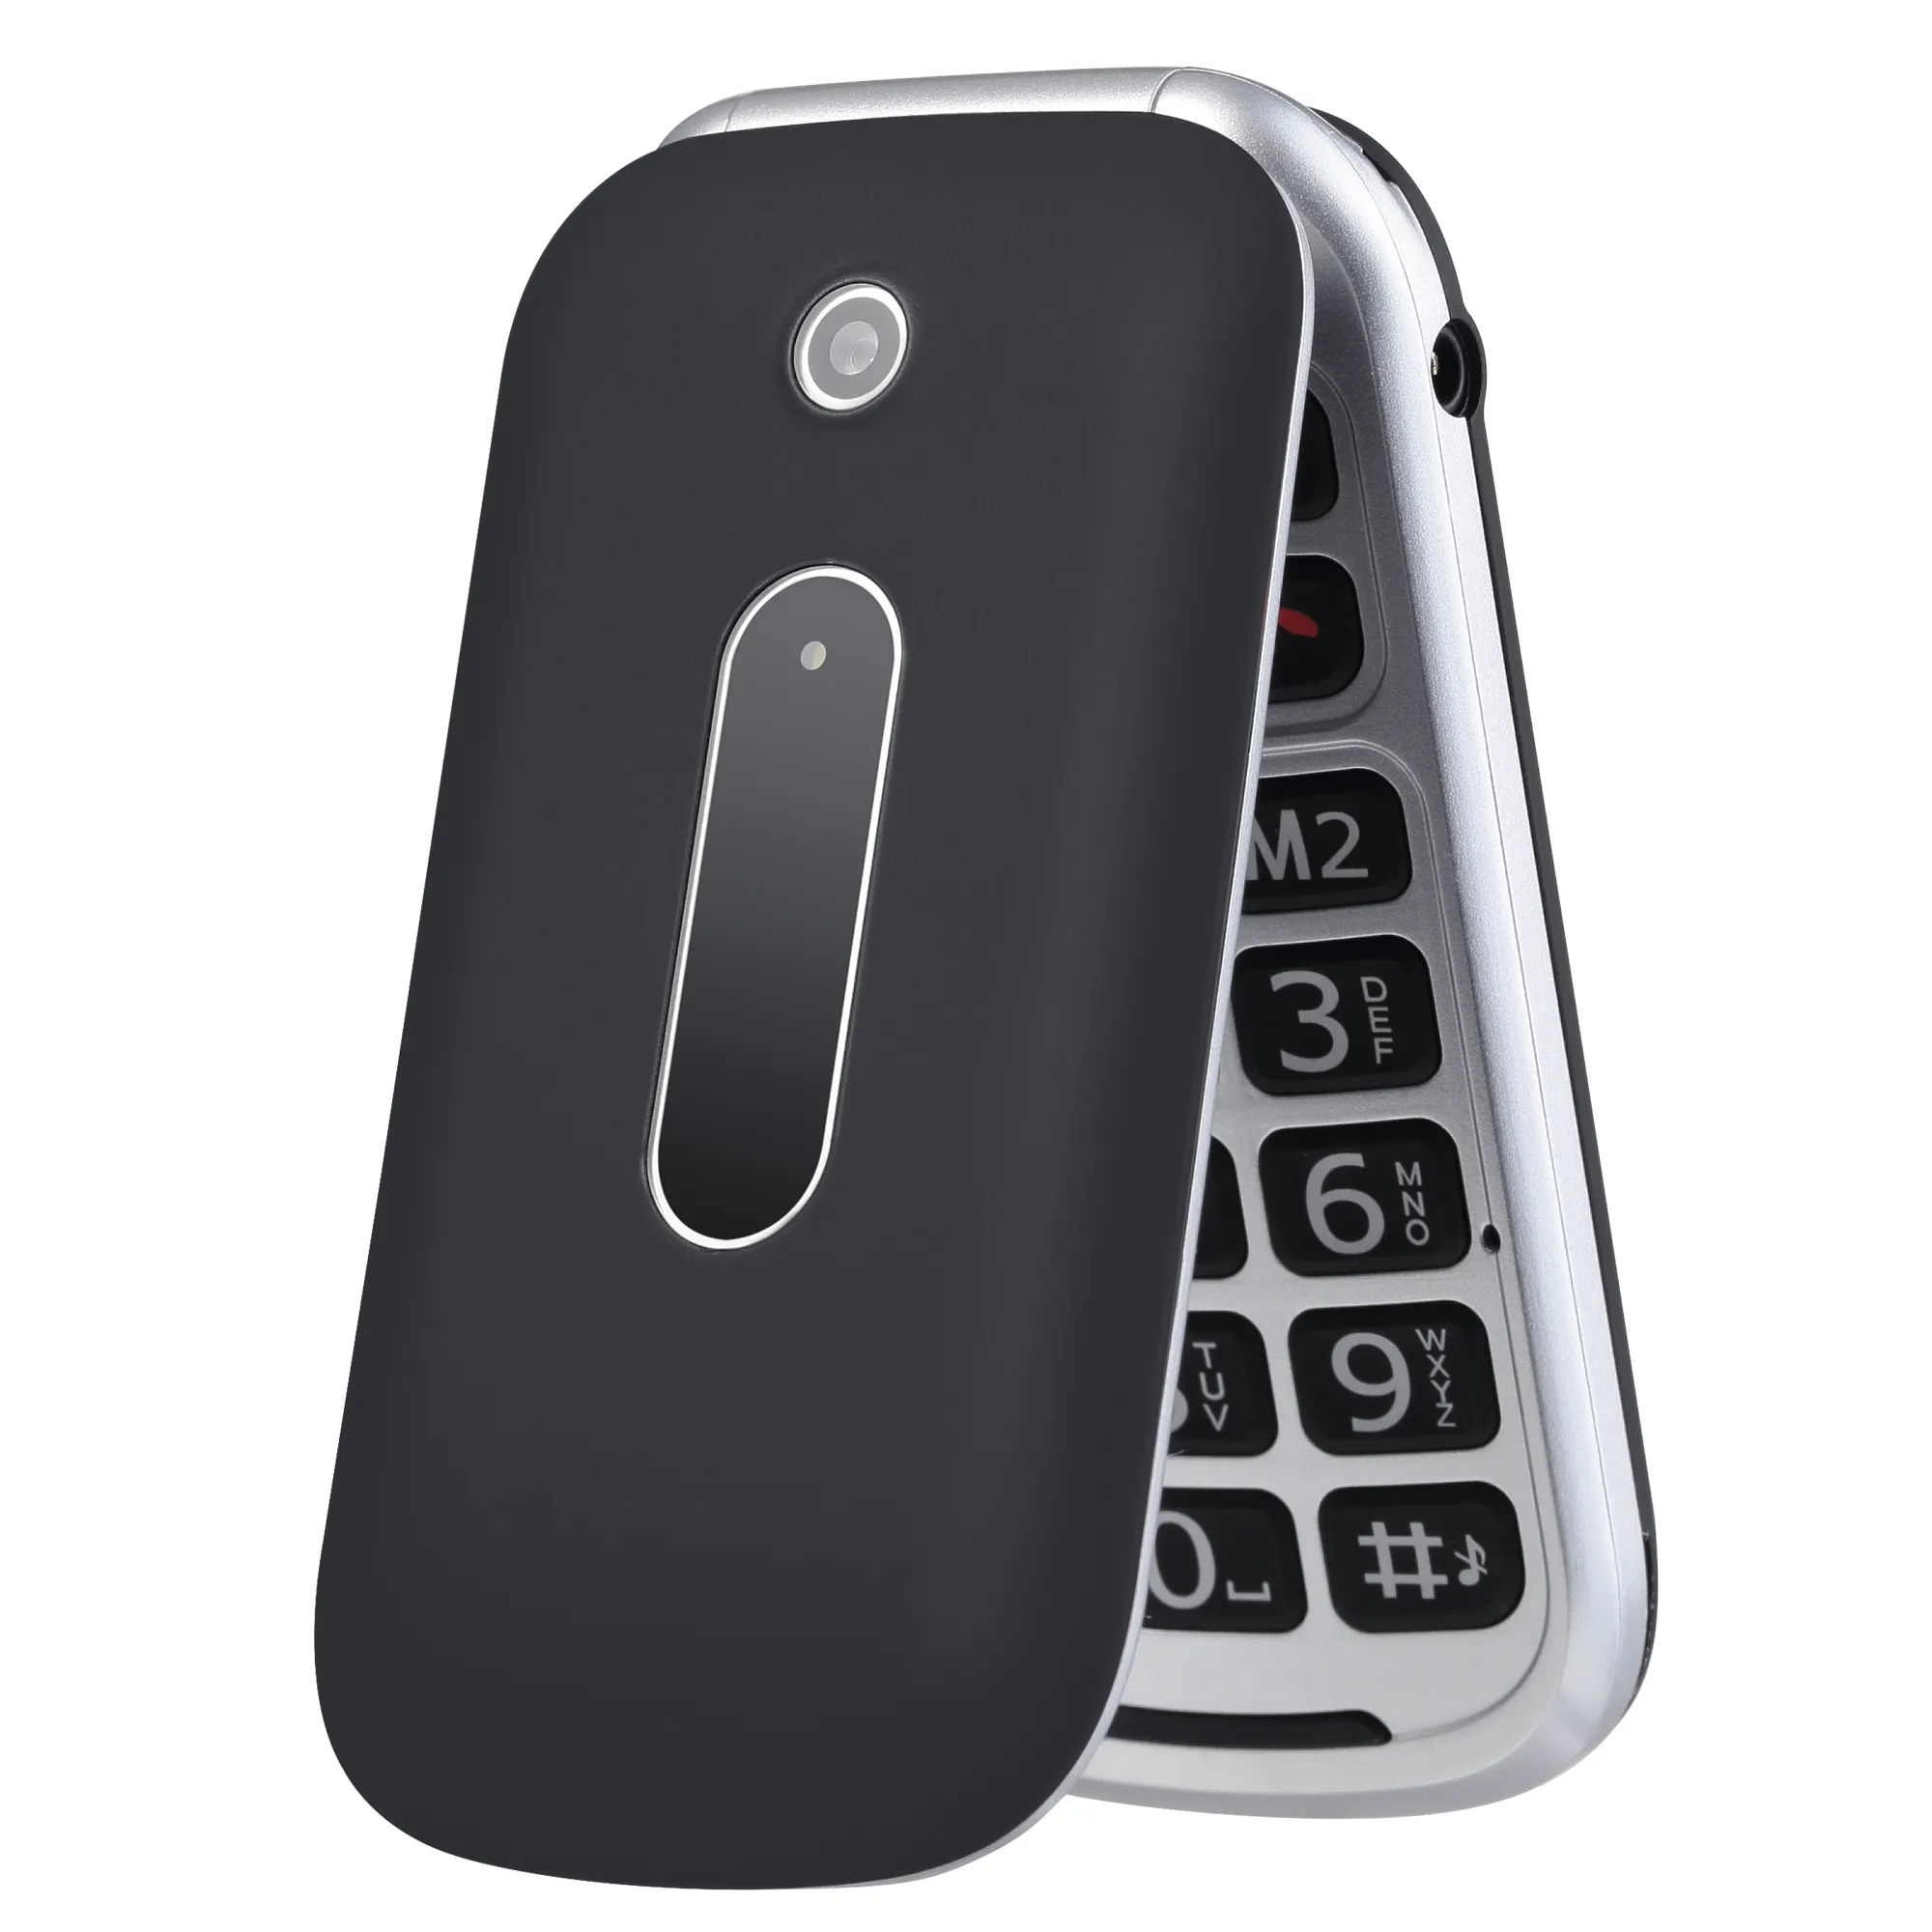 2023 Mode Zwarte Mobiele Draagbare Senior Mobiele Klaptelefoon Met Sos-Knop